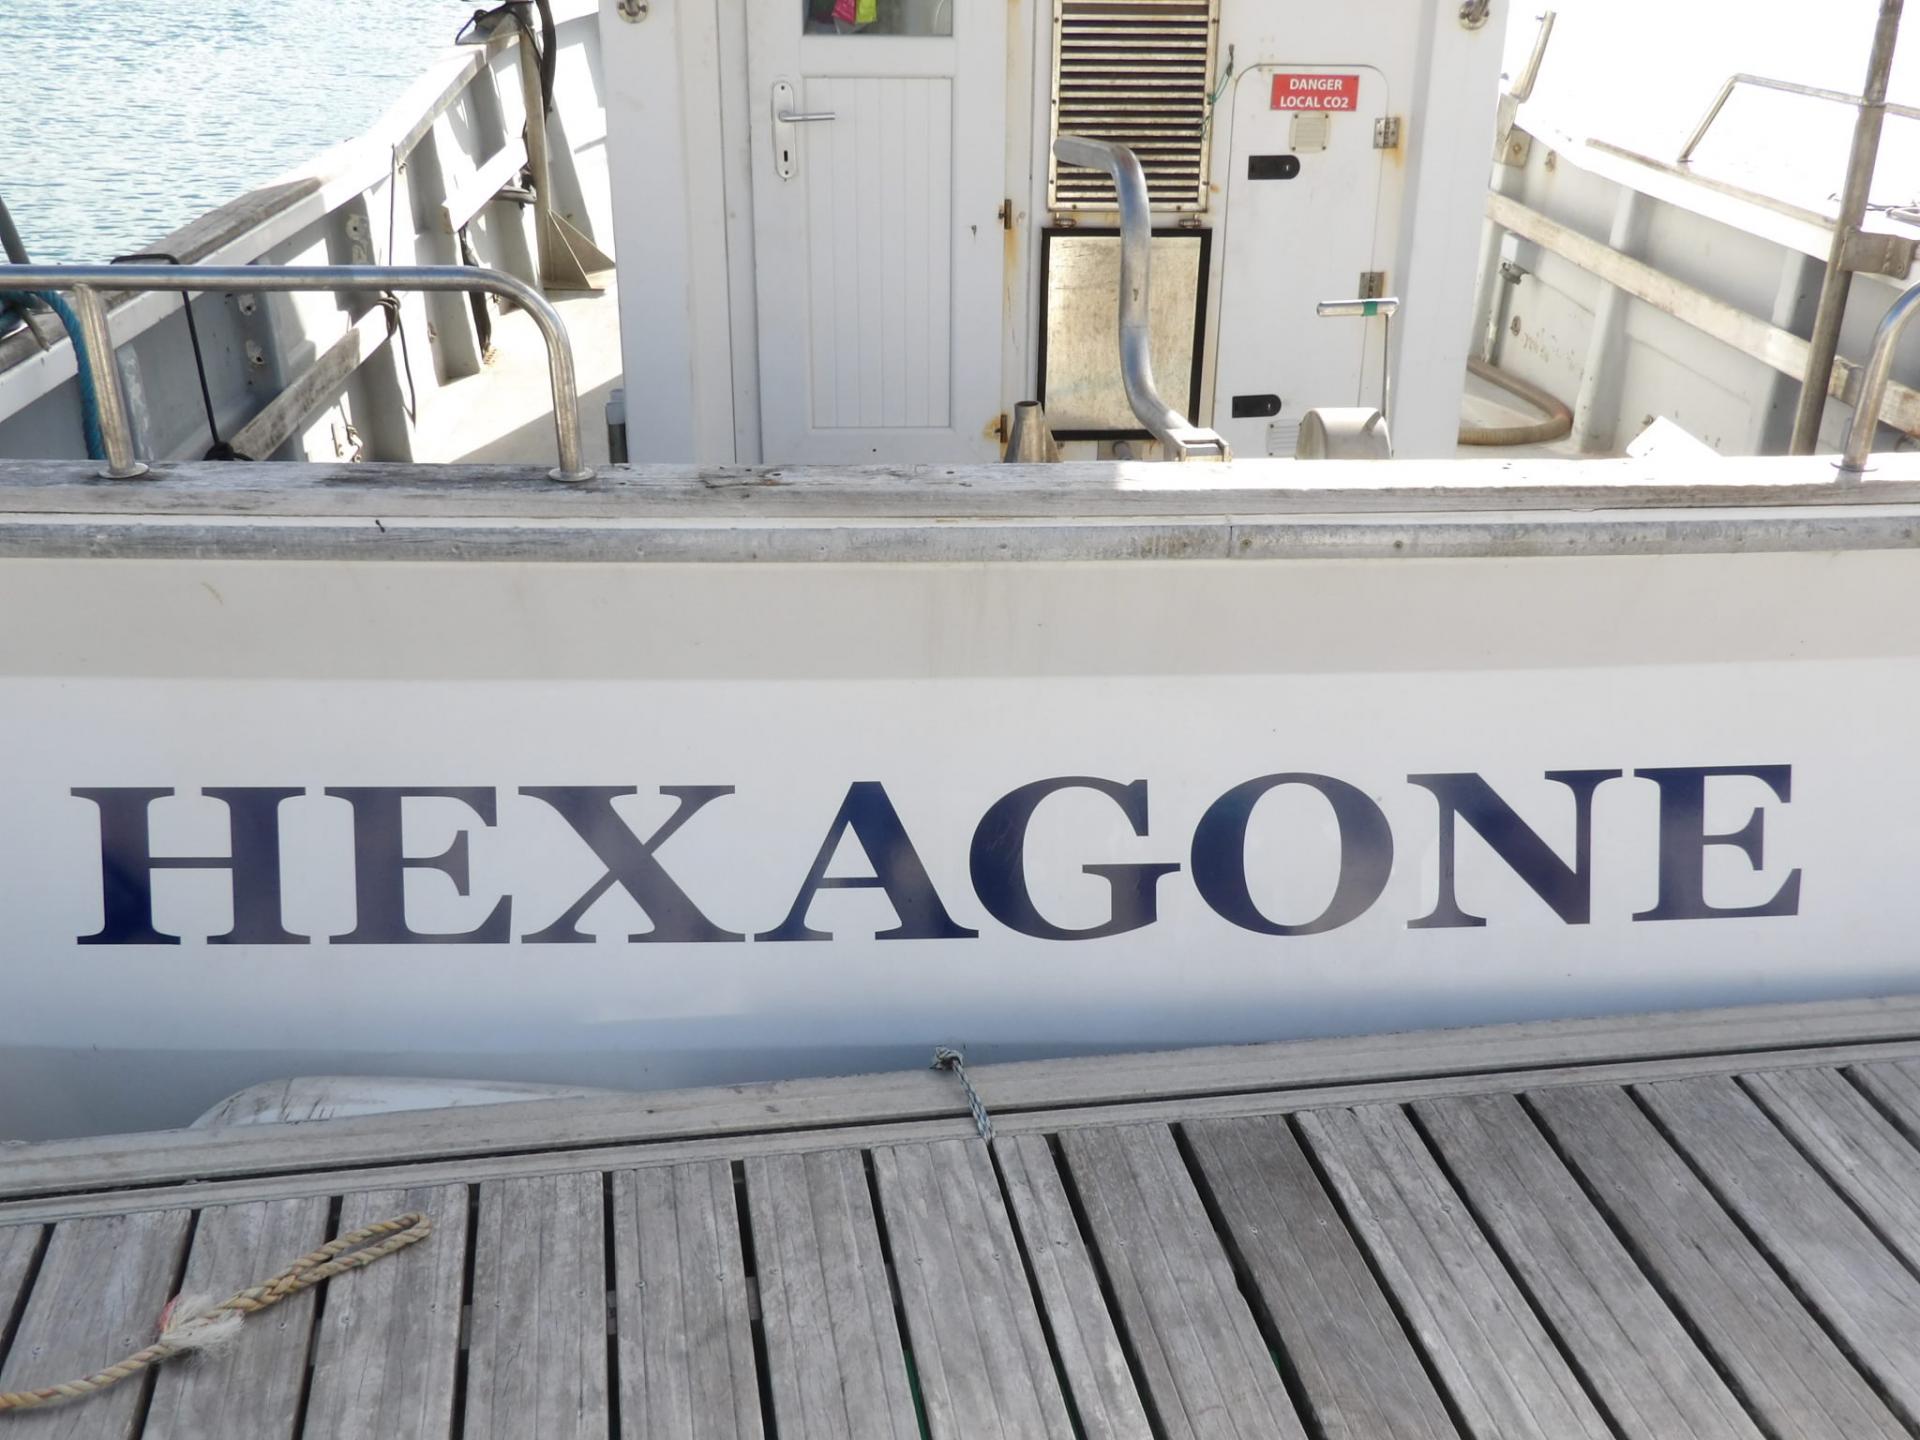 Hexagone nom